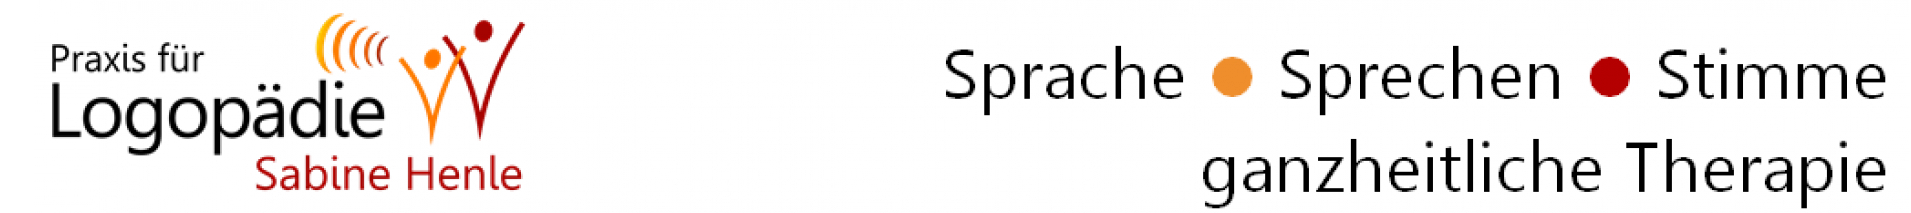 Logopädie in Söflingen Logo